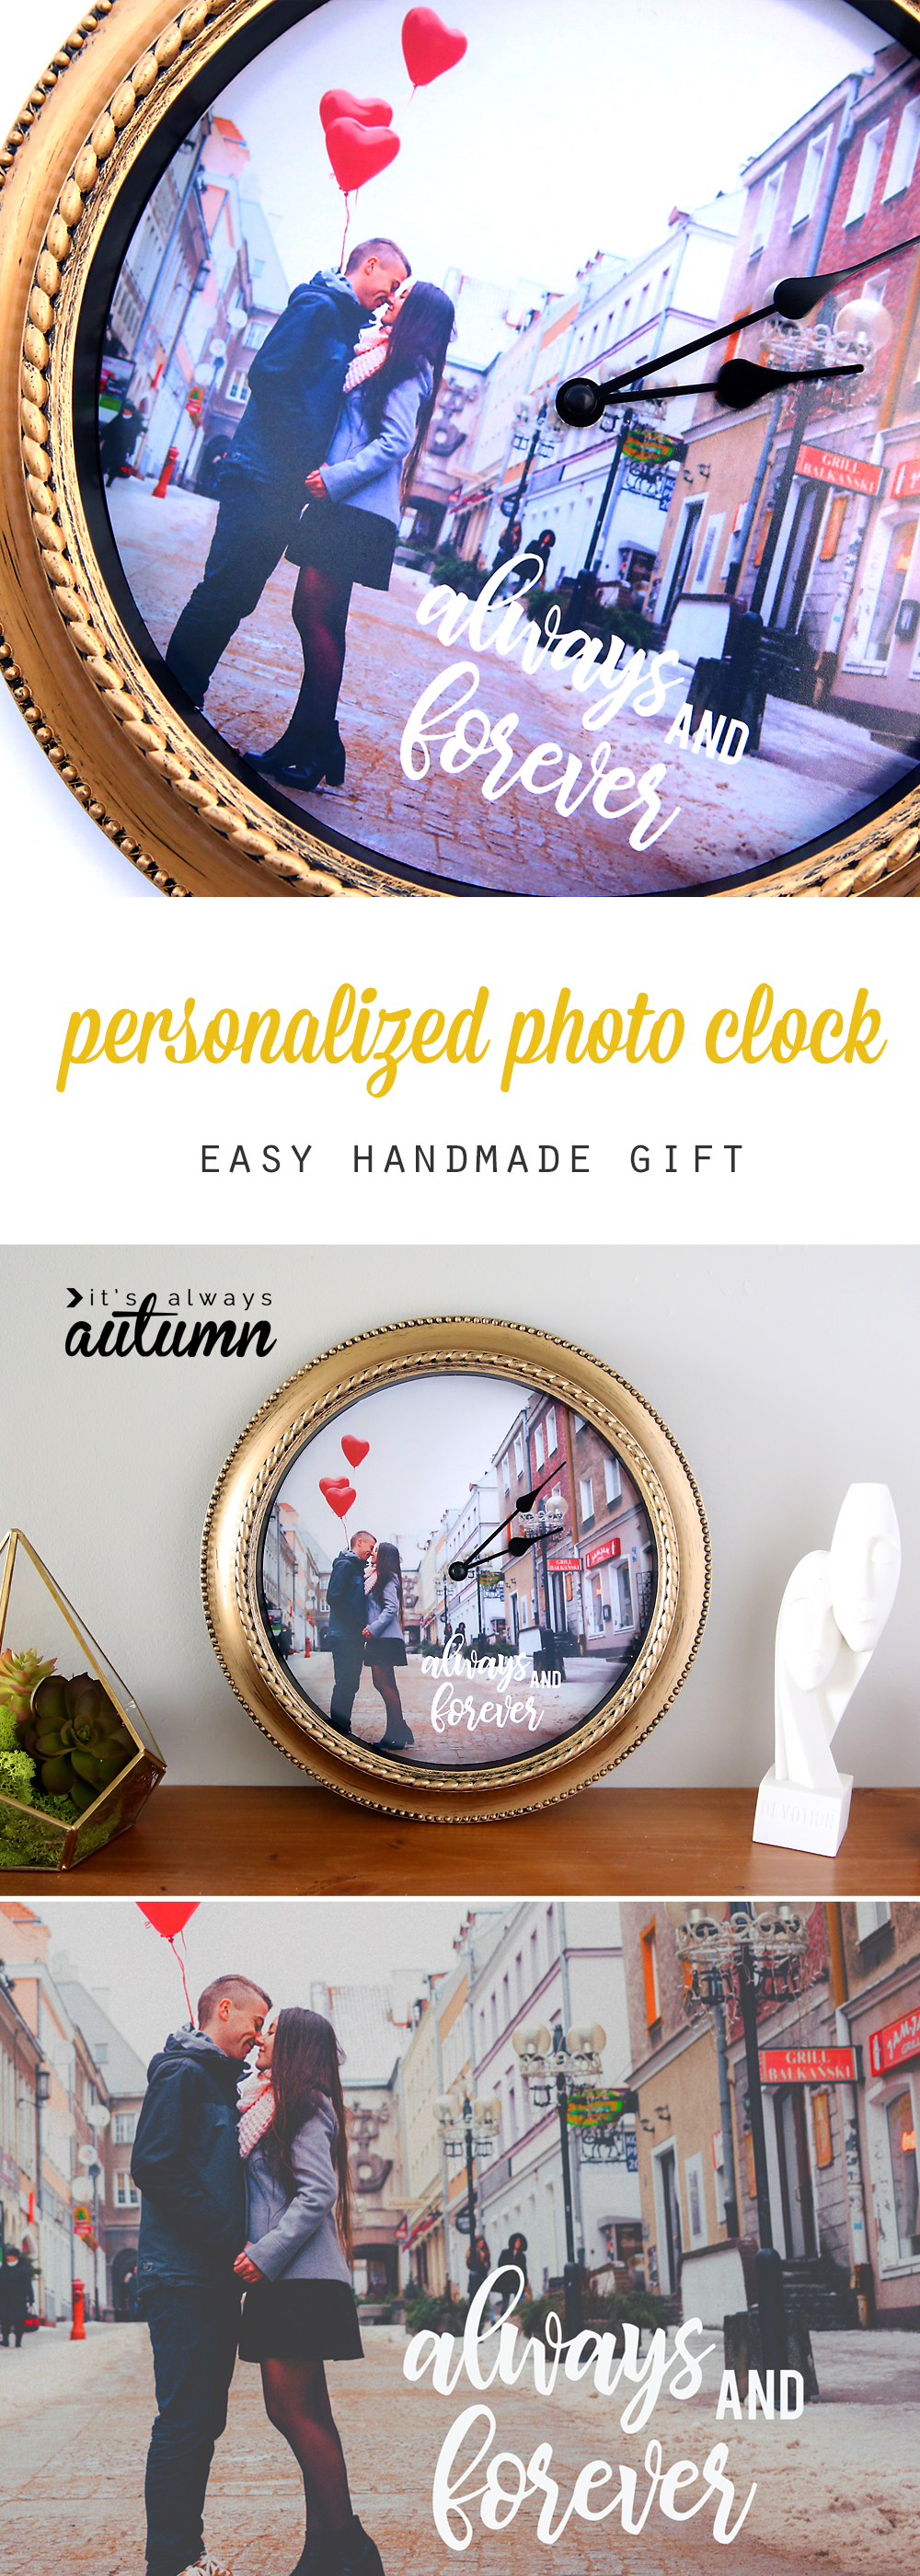 Personalized photo clock